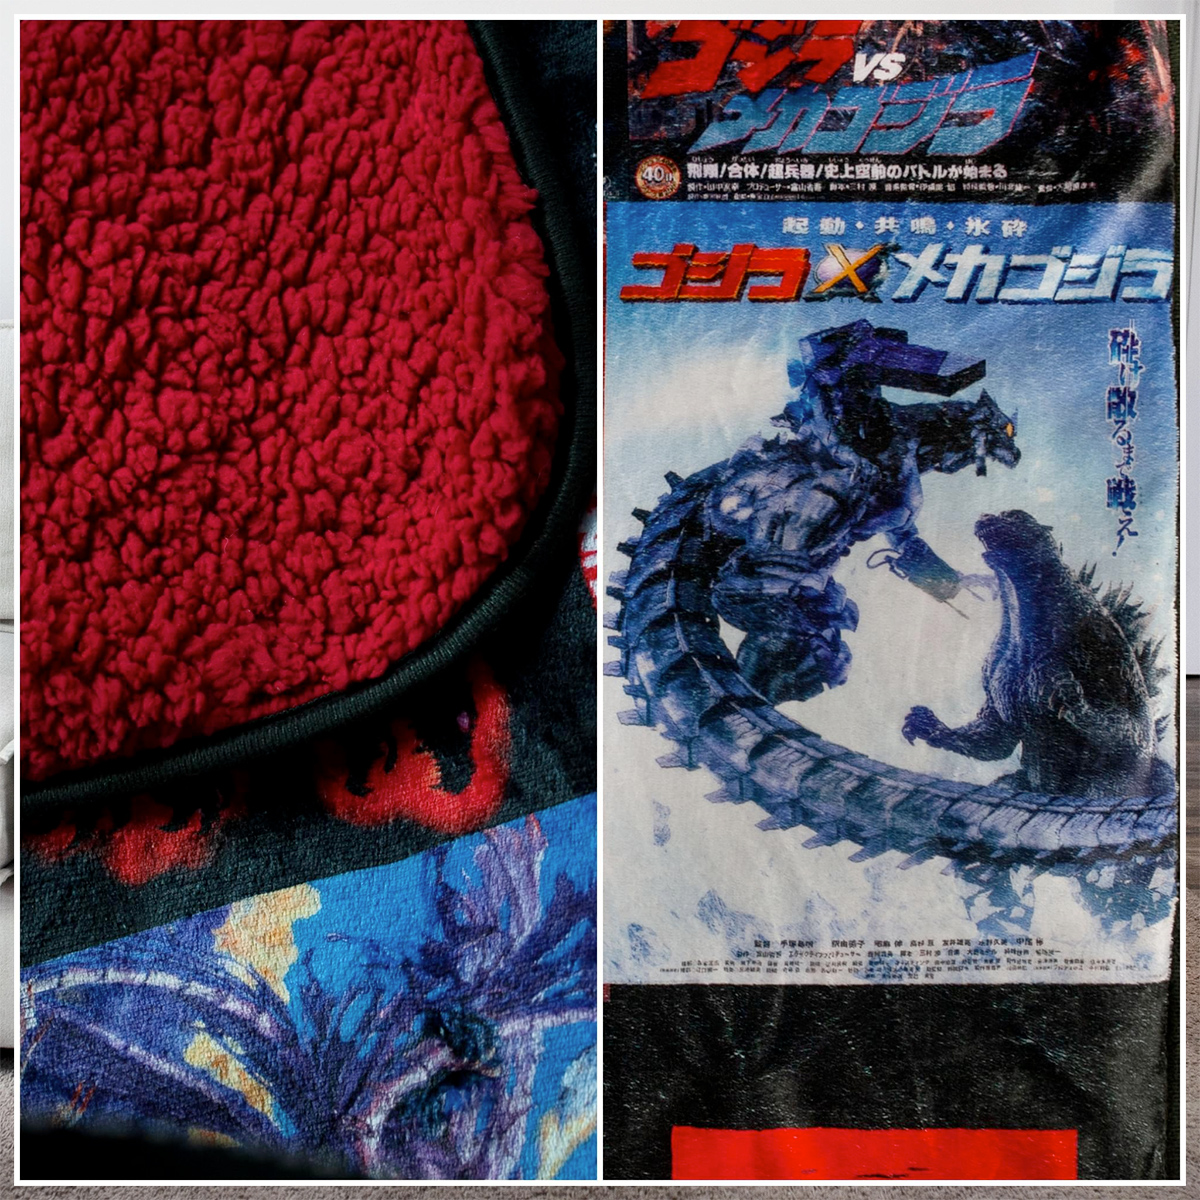 Cobertor de Lance Godzilla com 30 Pôsteres da Toho Pictures